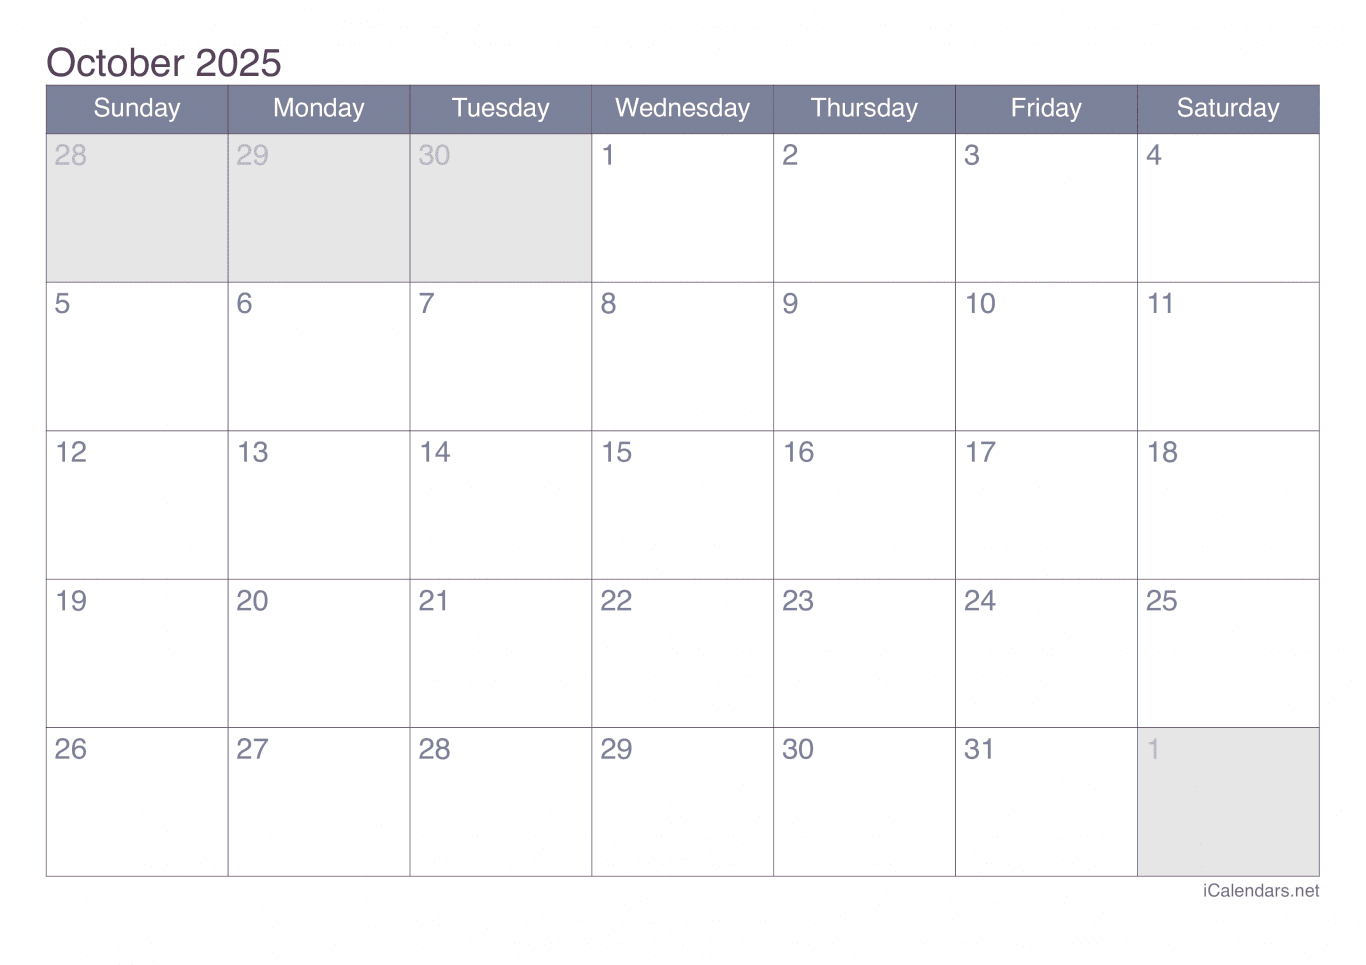 2025 October Calendar - Office